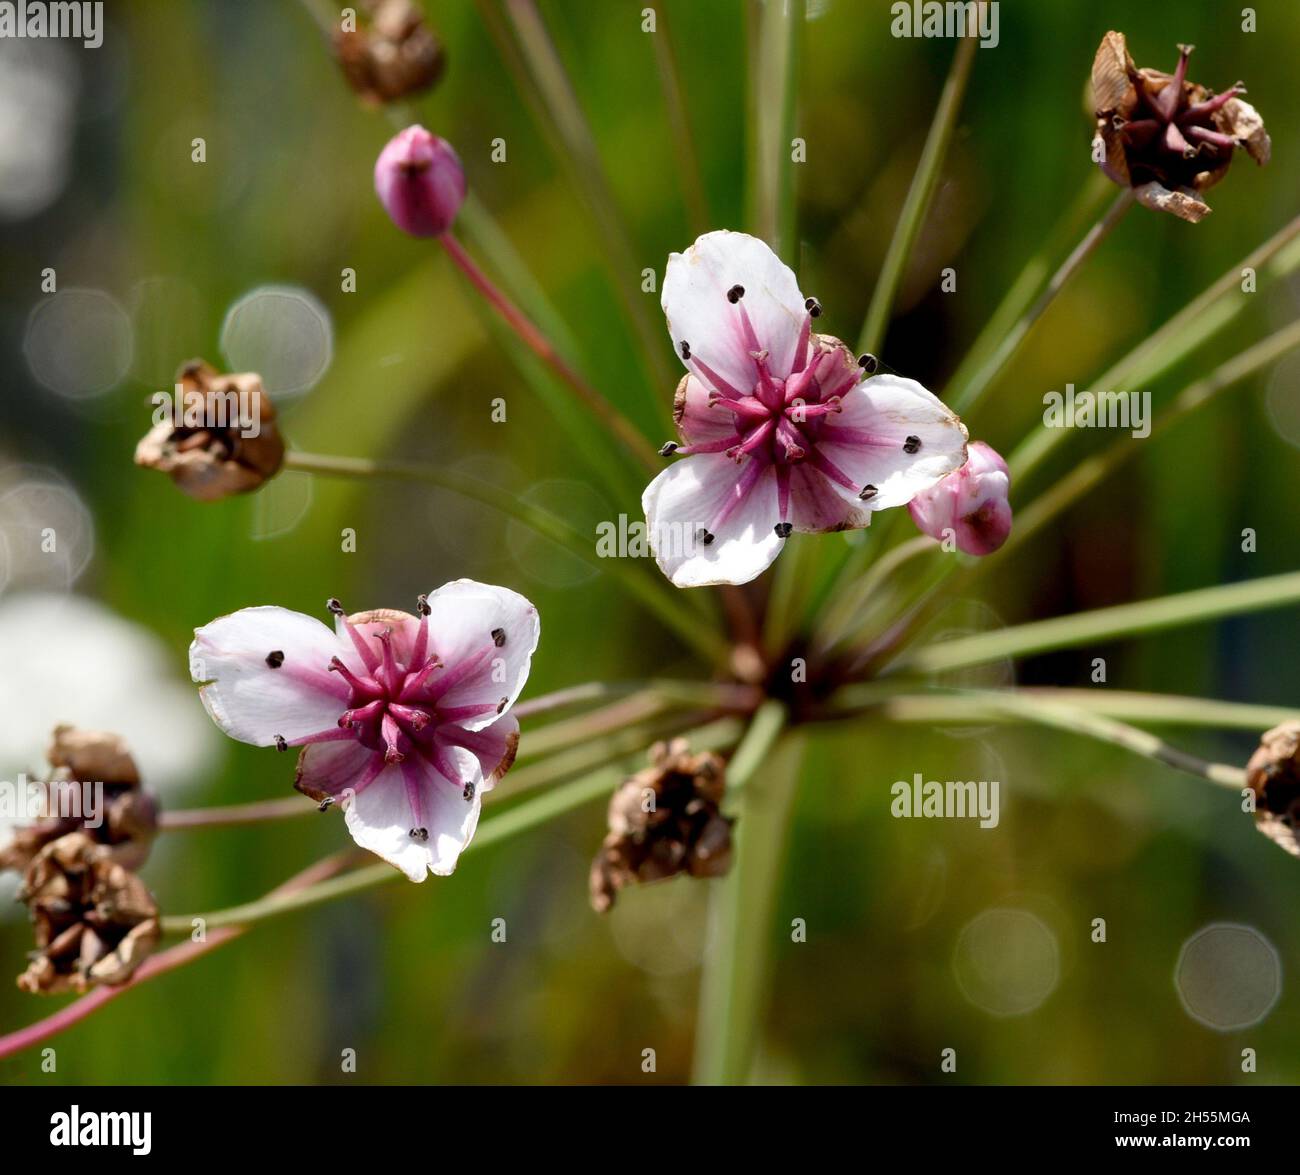 Schwanenblume, Butomus umbellatus ist eine froschloeffelartige Wasserpflanze mit rosa Blueten. La flor del cisne, Butomus umbellatus, es un aquat en forma de rana Foto de stock